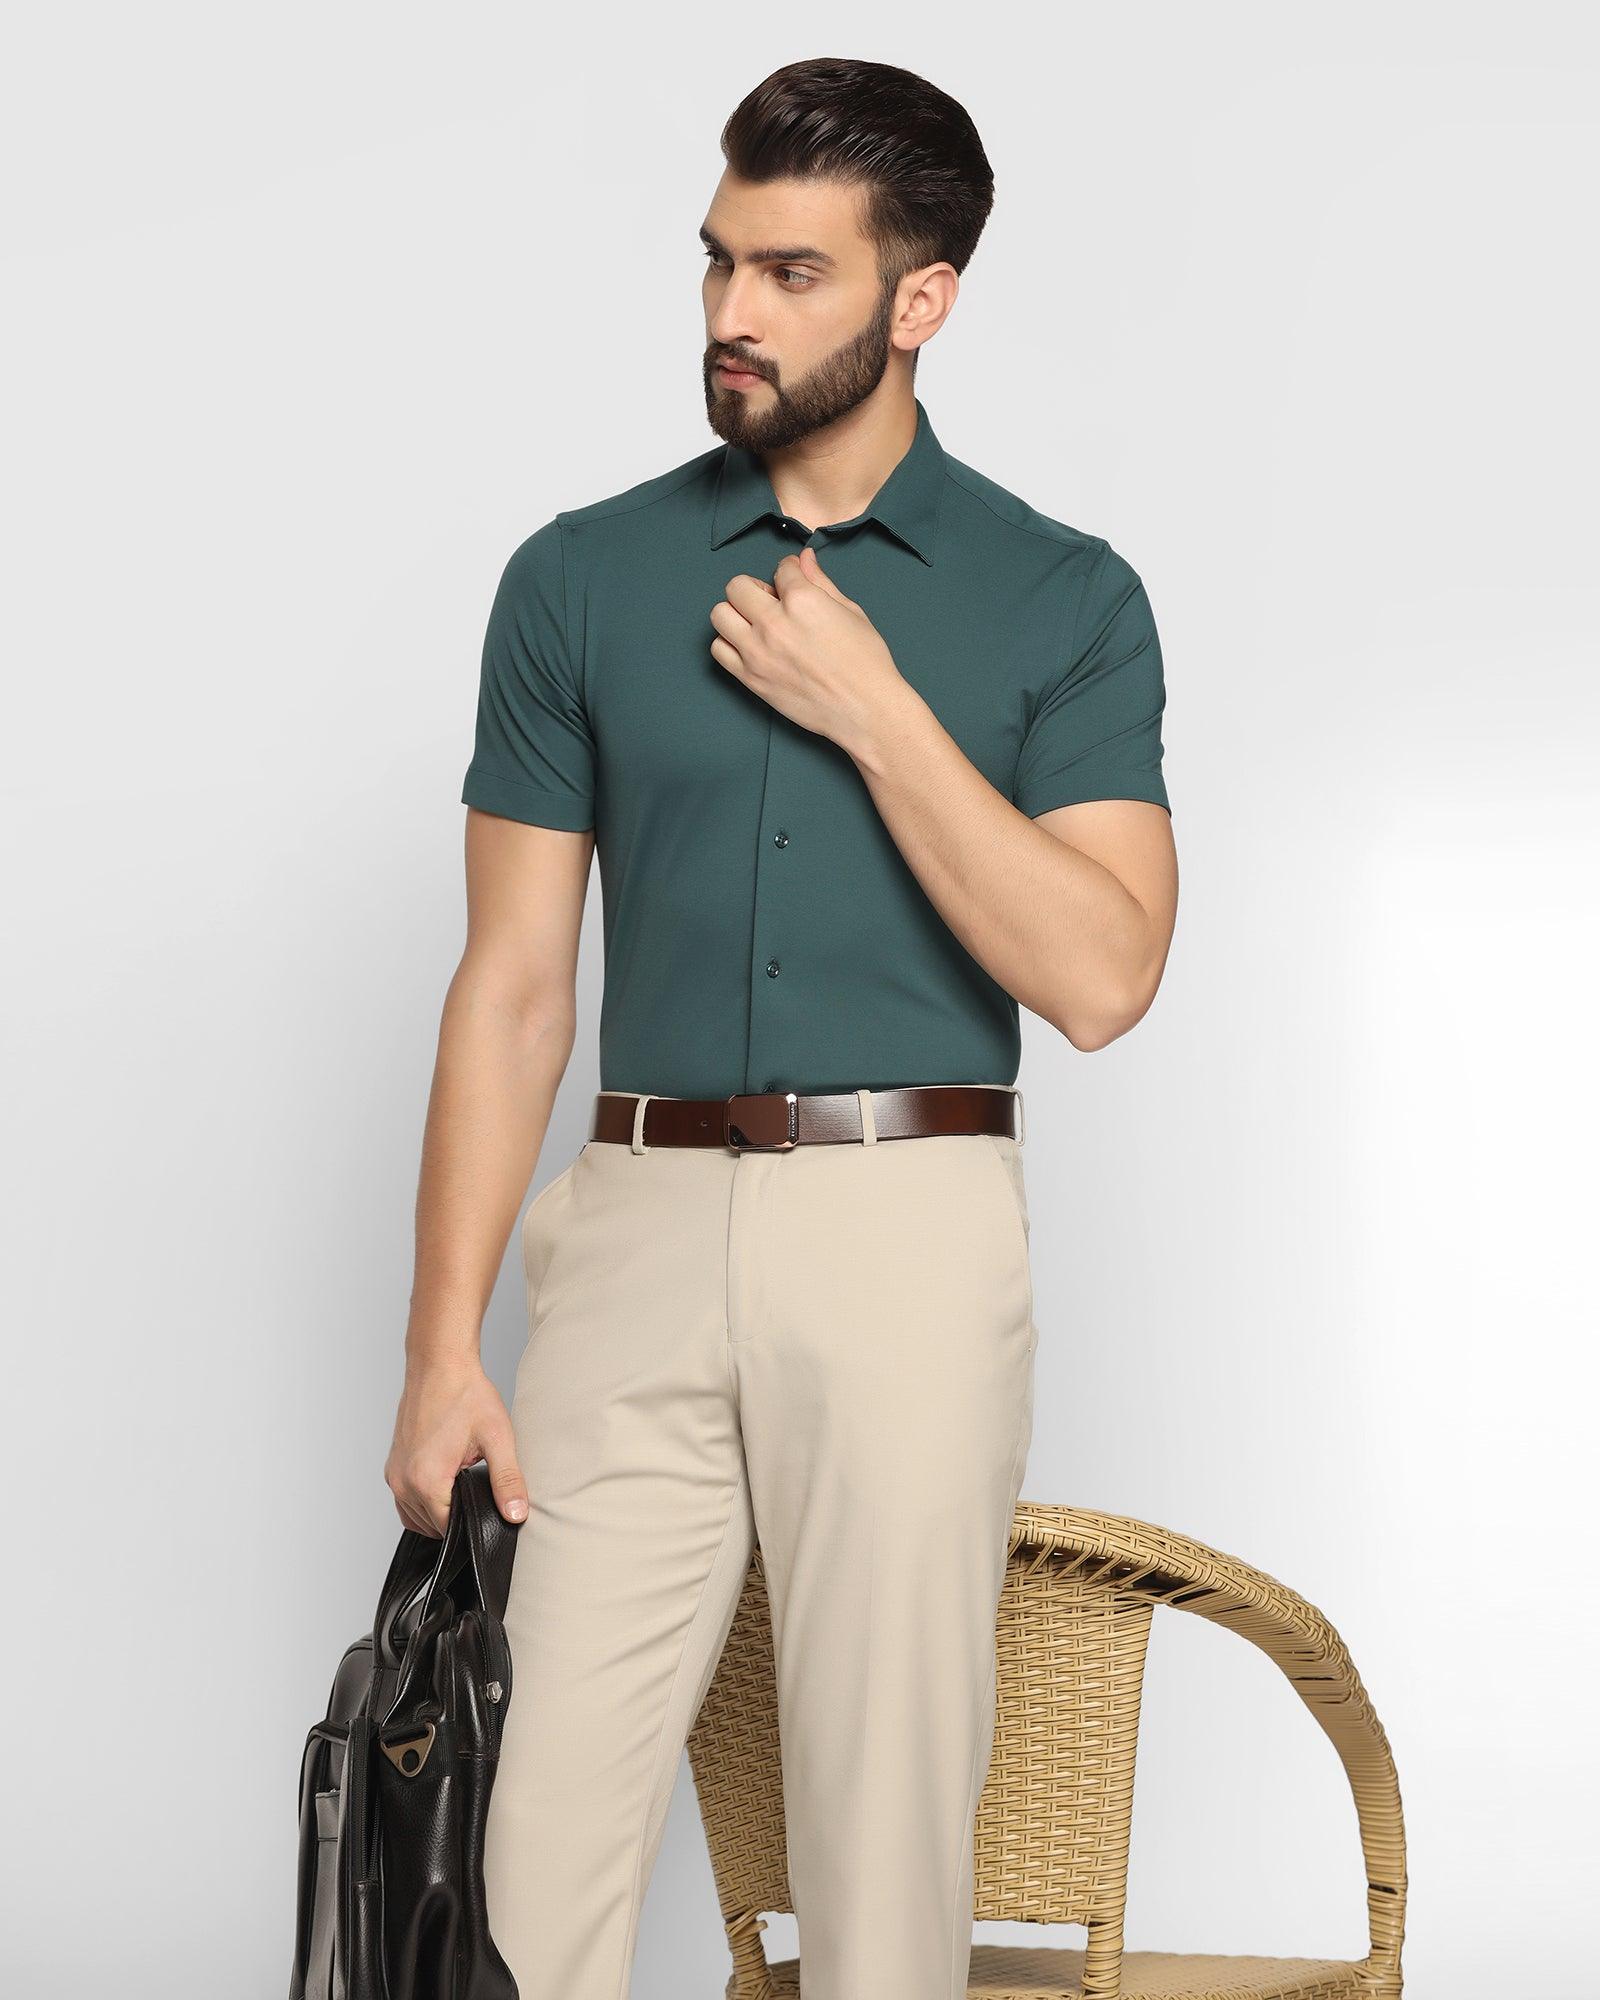 Formal Half Sleeve Teal Solid Shirt - Primus